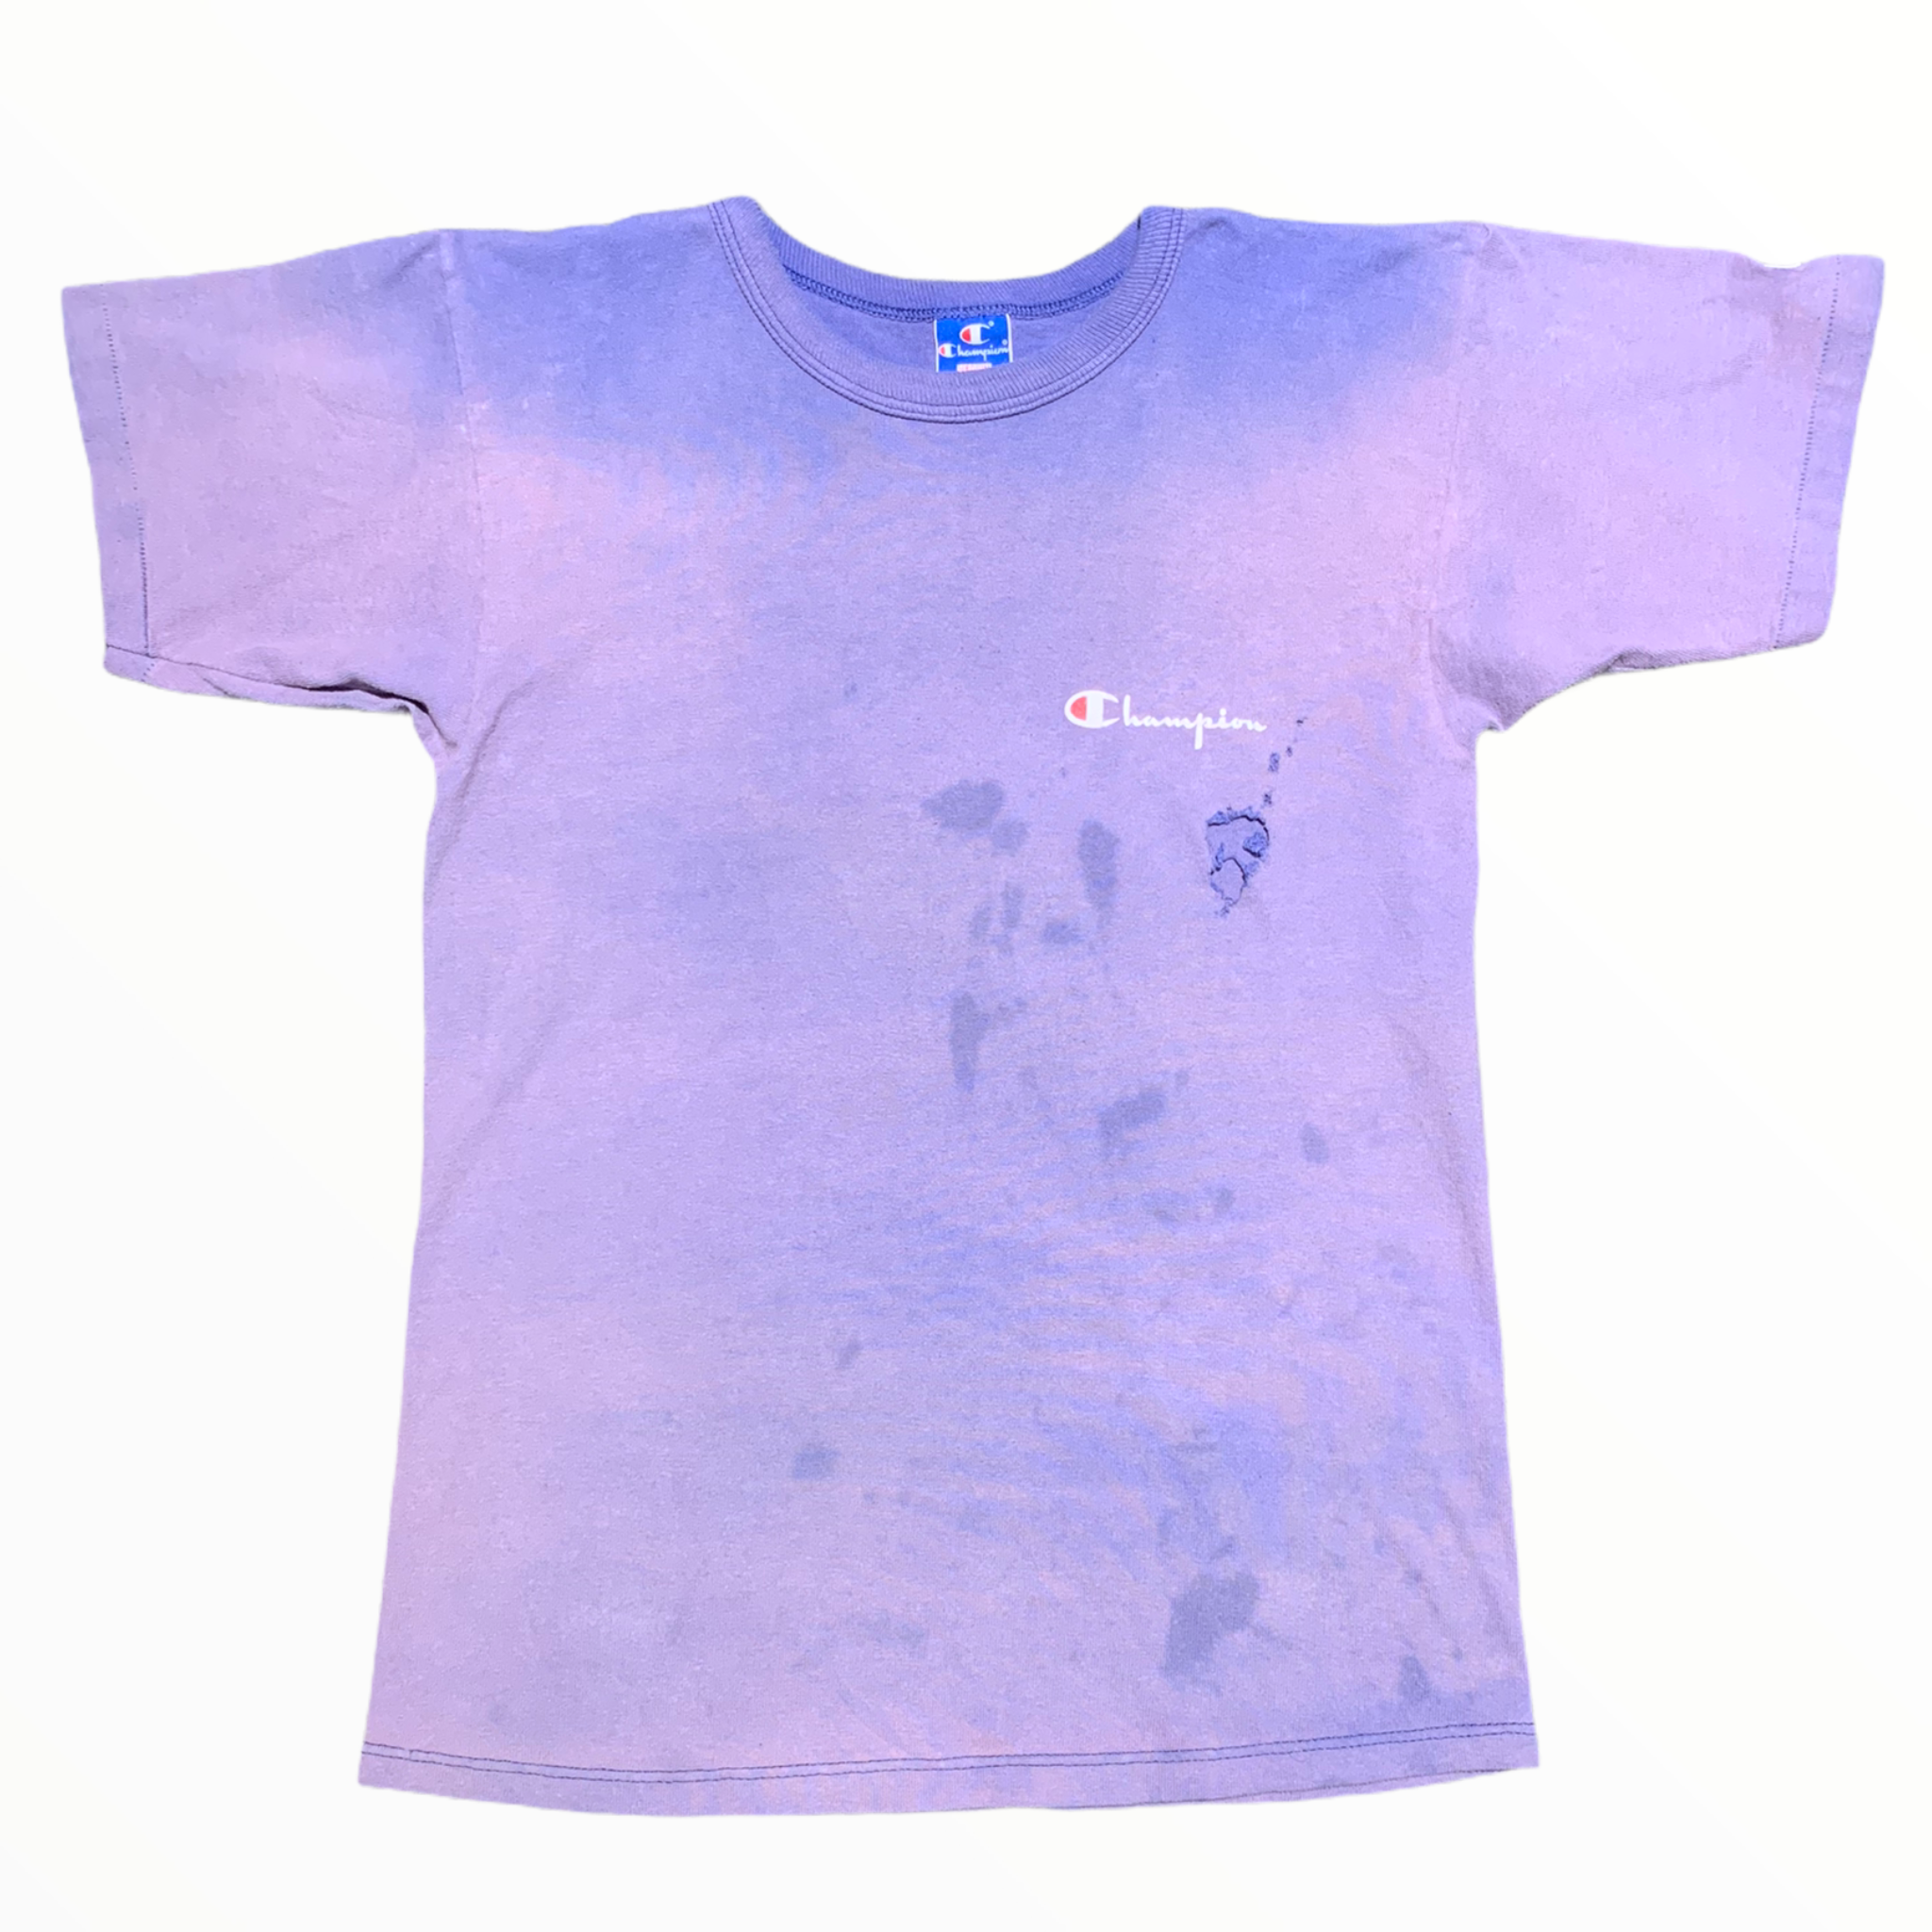 Vintage Faded Champion T-Shirt - Blue/Purple - S/M